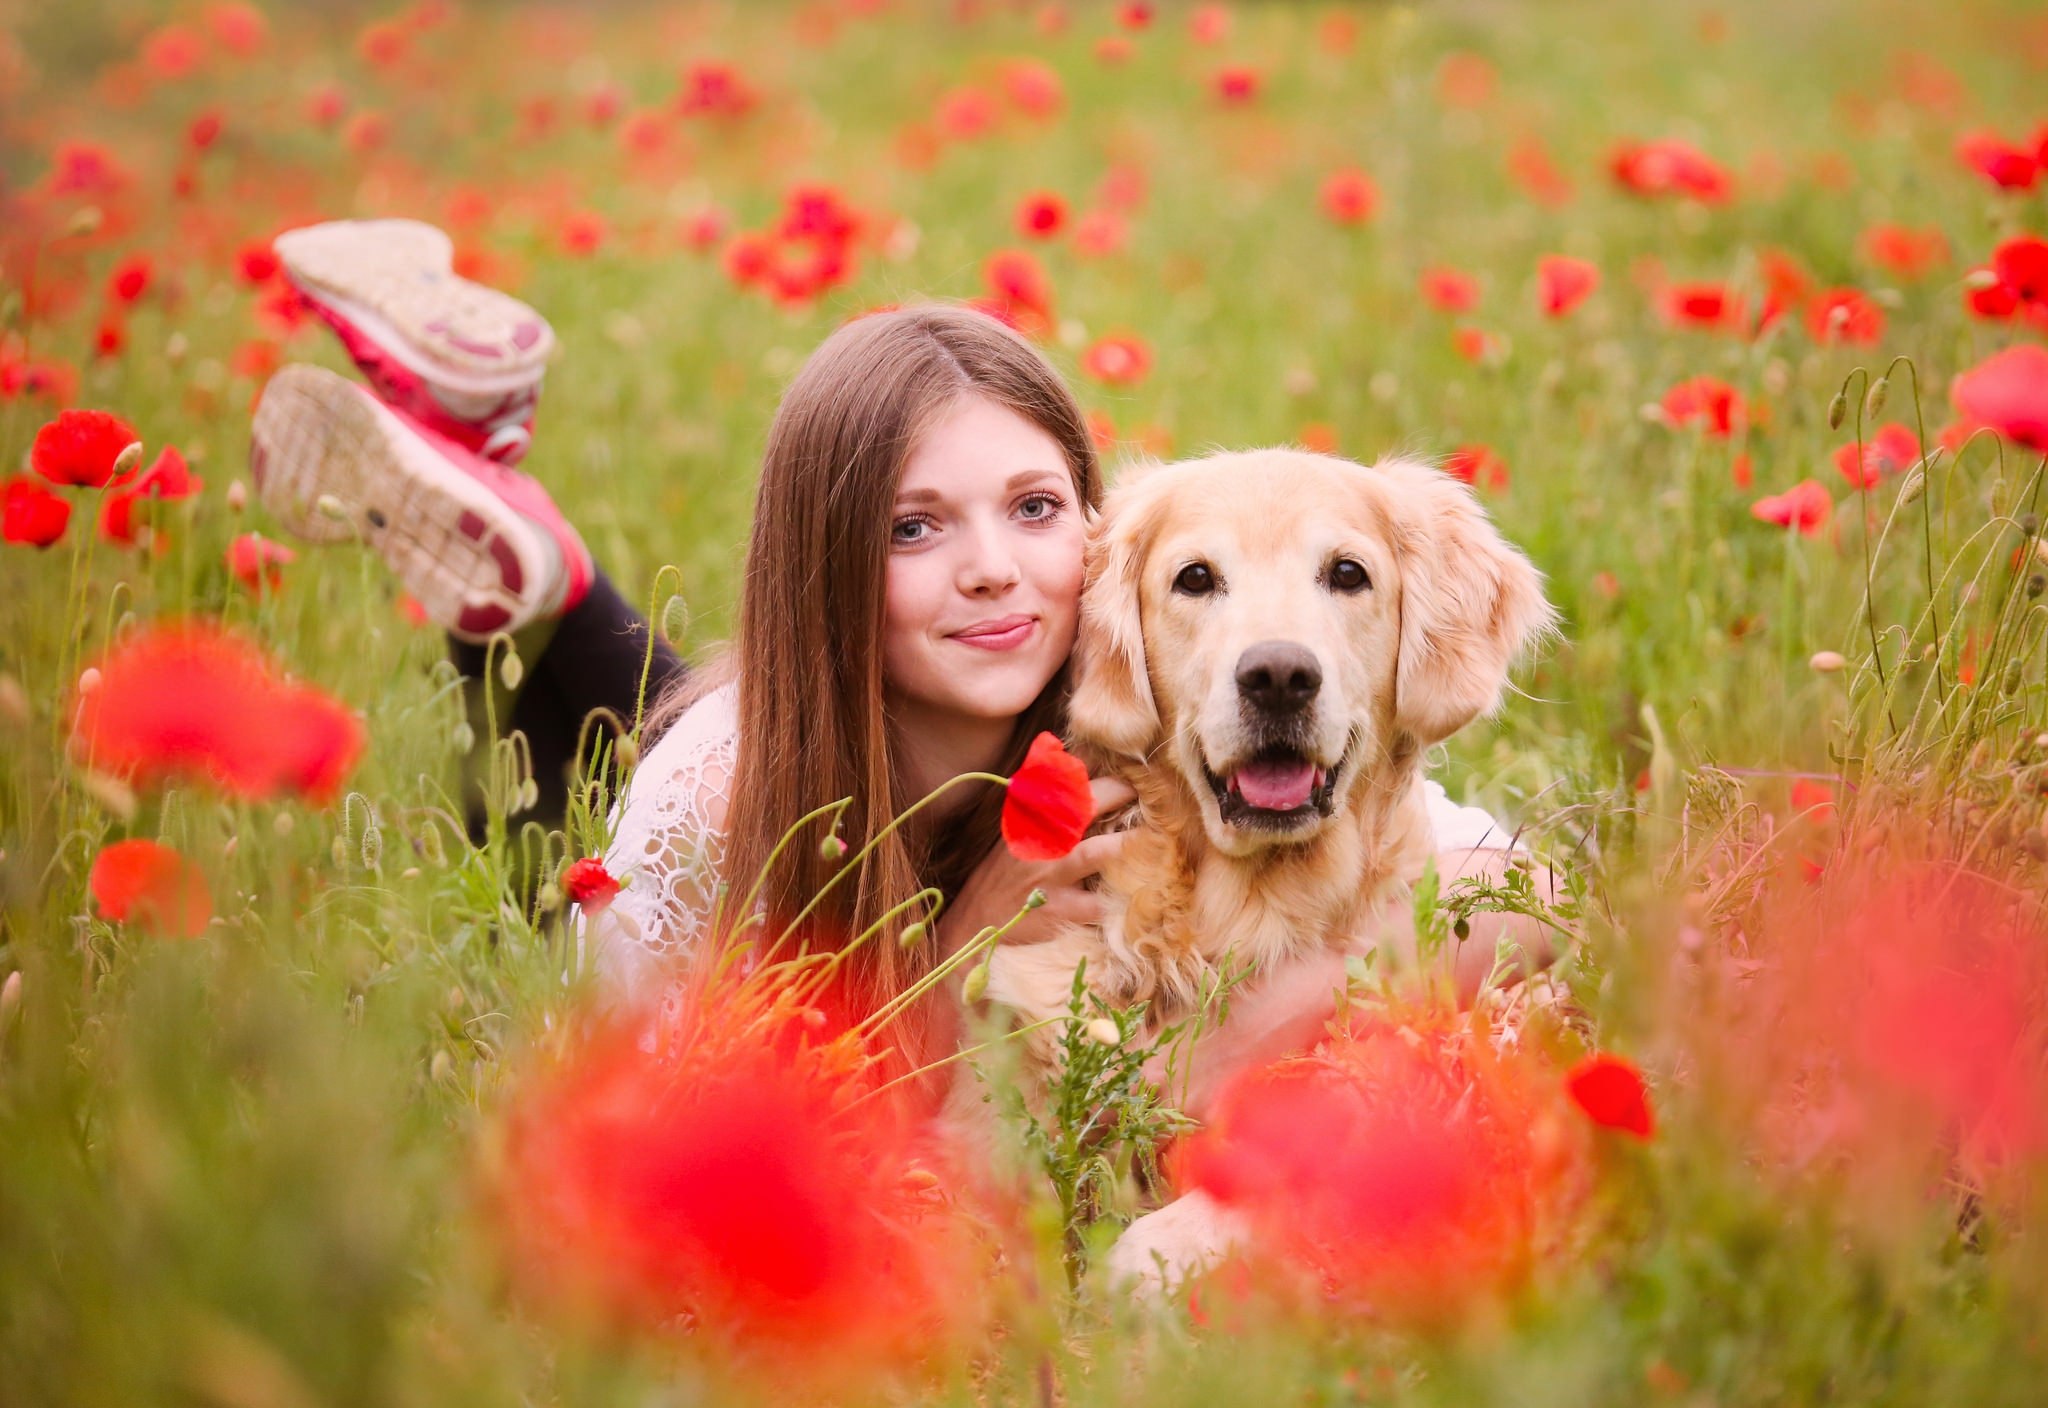 Картинка девушки с собакой. Девушка с собакой. Девушка с собакой фотосессия. Собака на природе. Красивая девушка с собачкой.